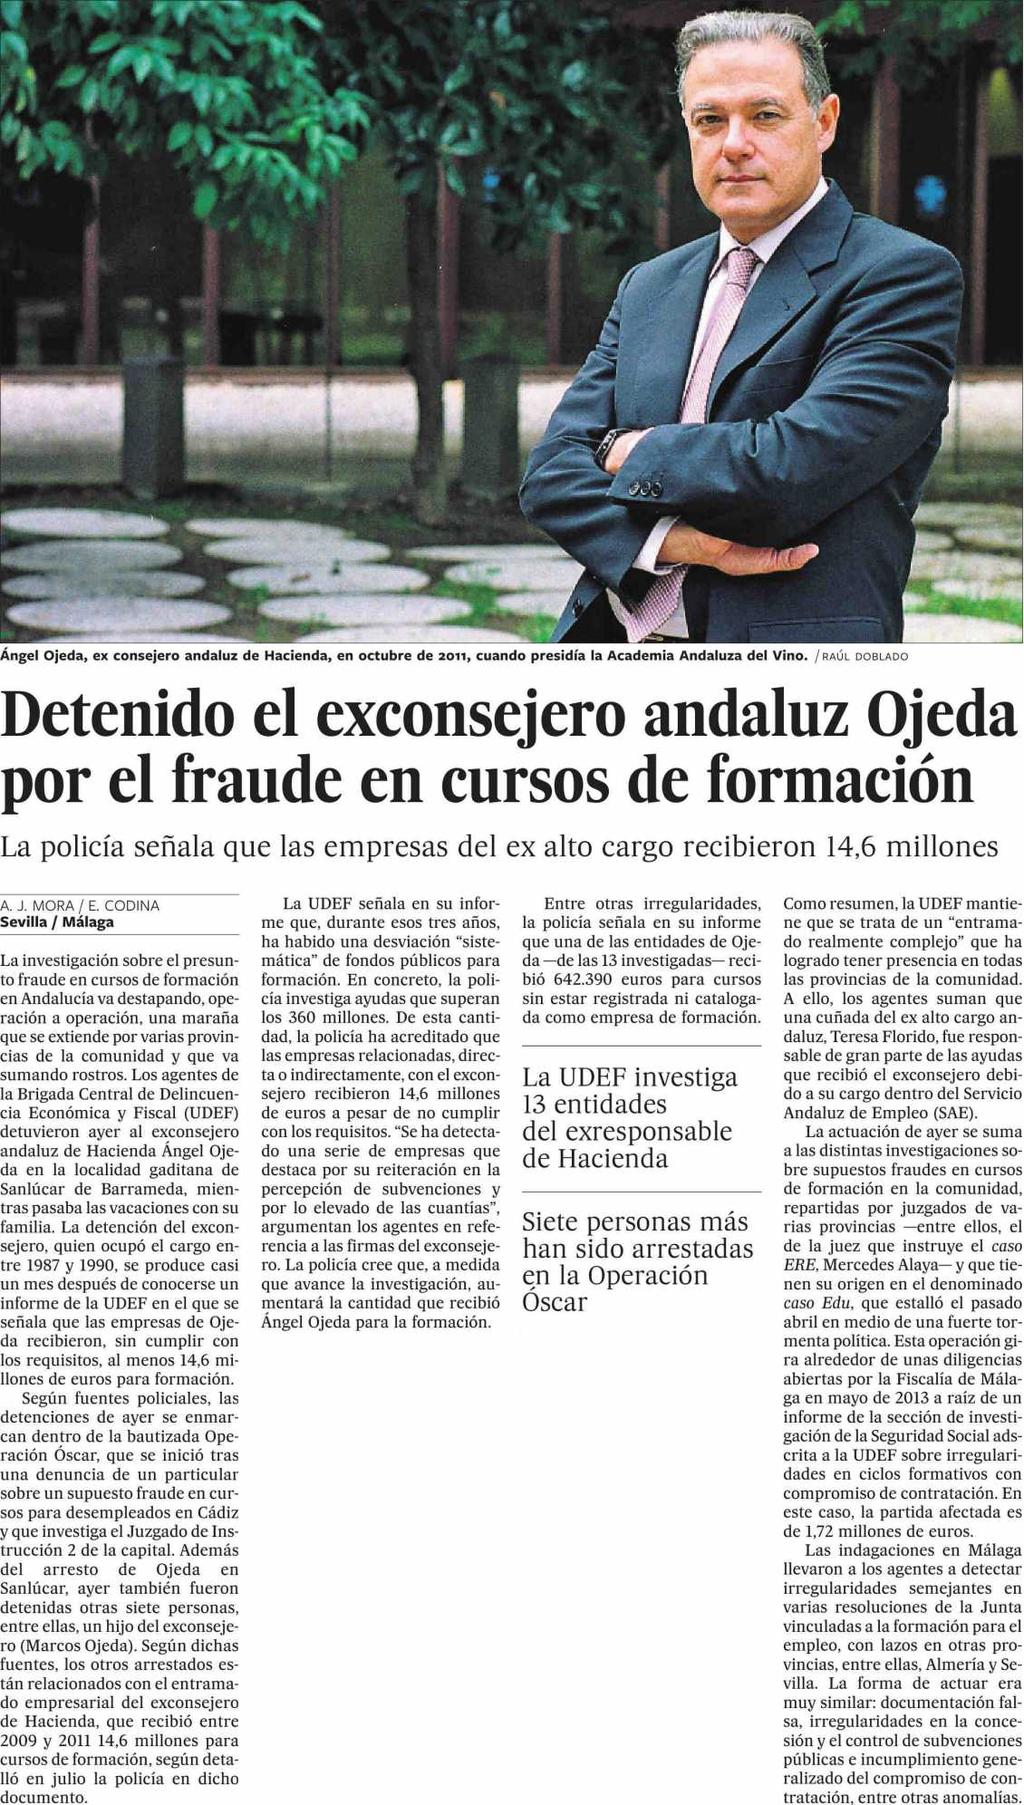 EL PAIS (EDICION NACIONAL) MADRID Prensa: Diaria Tirada: 359.